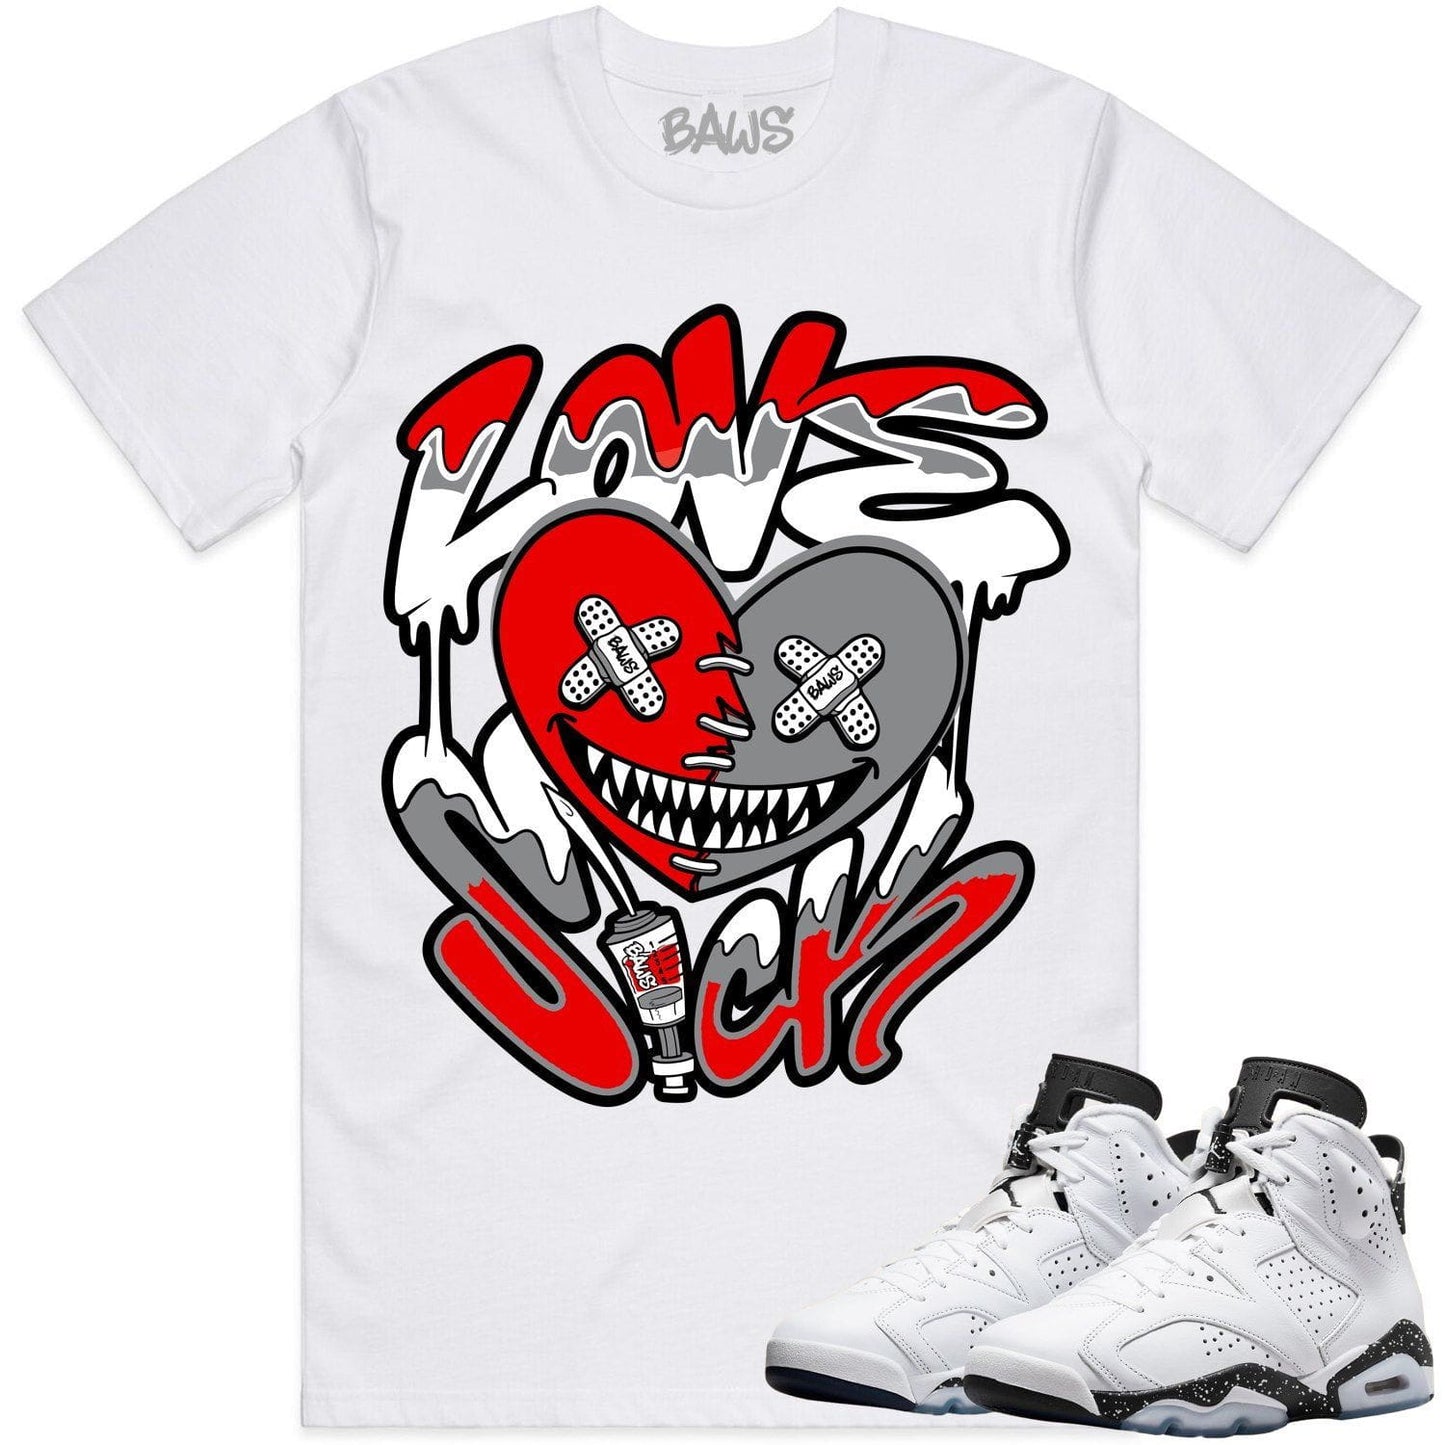 Oreo 6s Shirts - Jordan 6 Reverse Oreo 6s Sneaker Tees - Love Sick